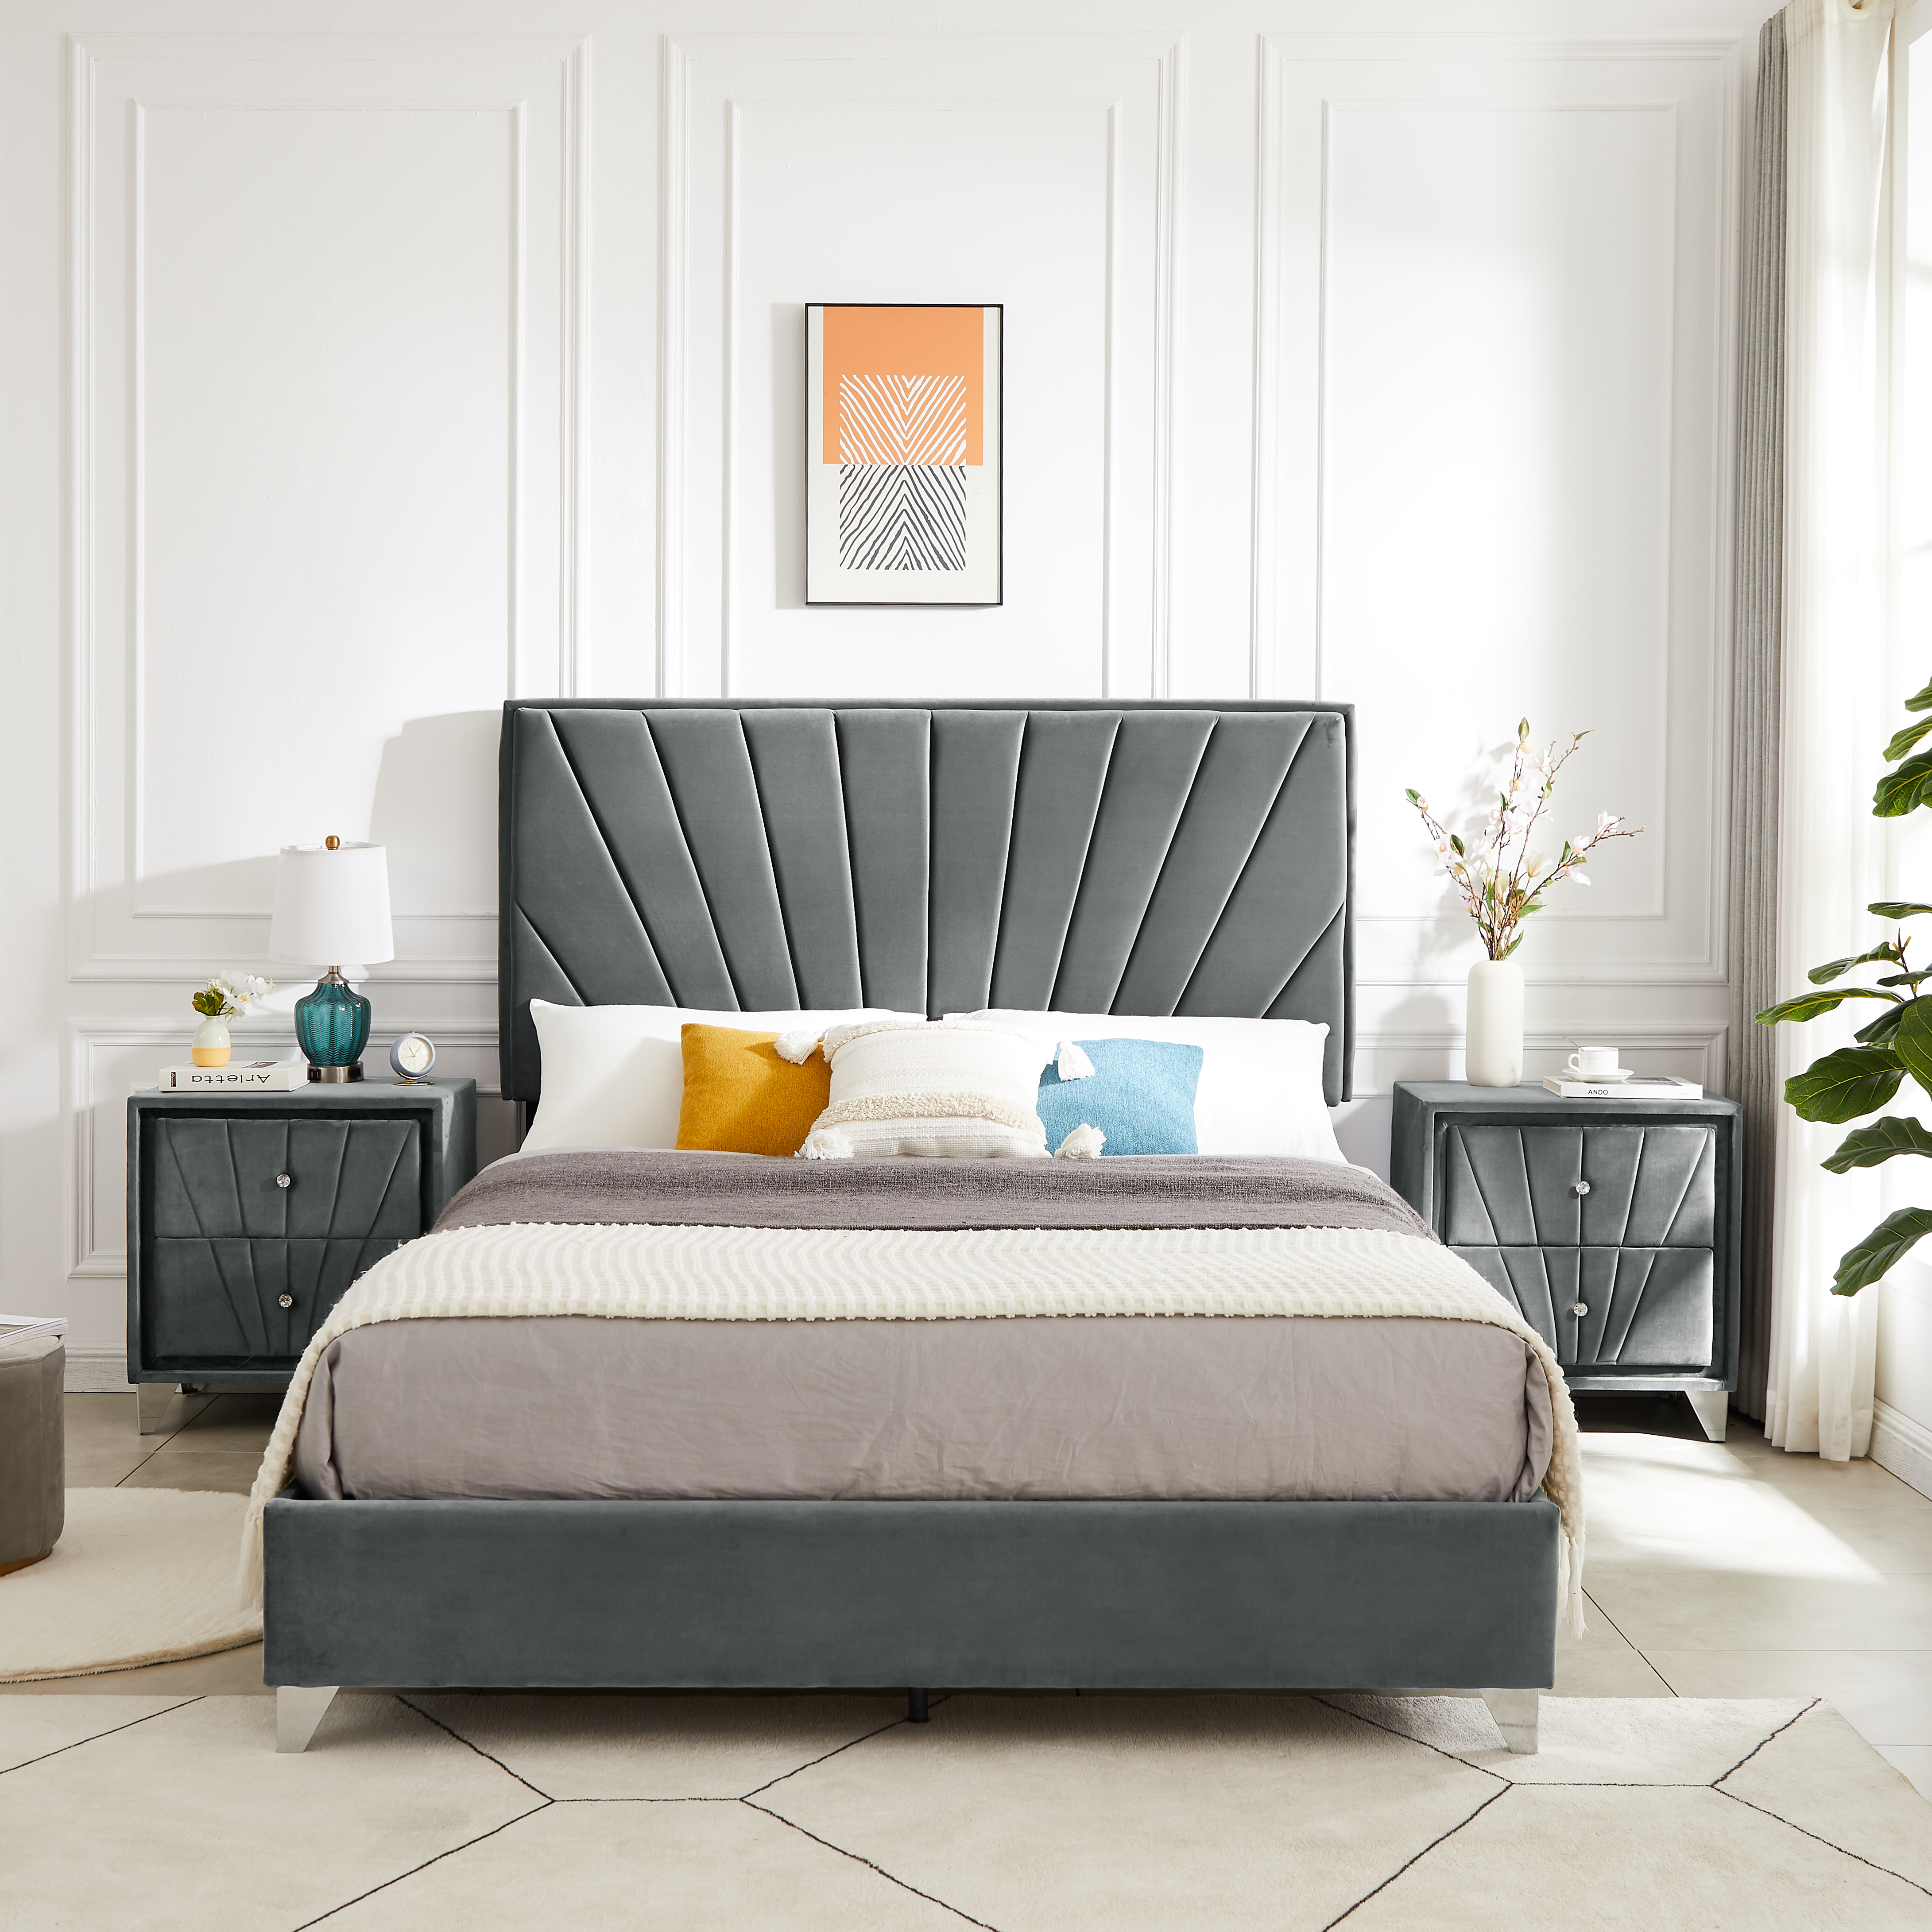 B108 Beautiful line stripe cushion headboard Full bed, strong wooden slats + metal support feet, Gray Flannelette-CASAINC